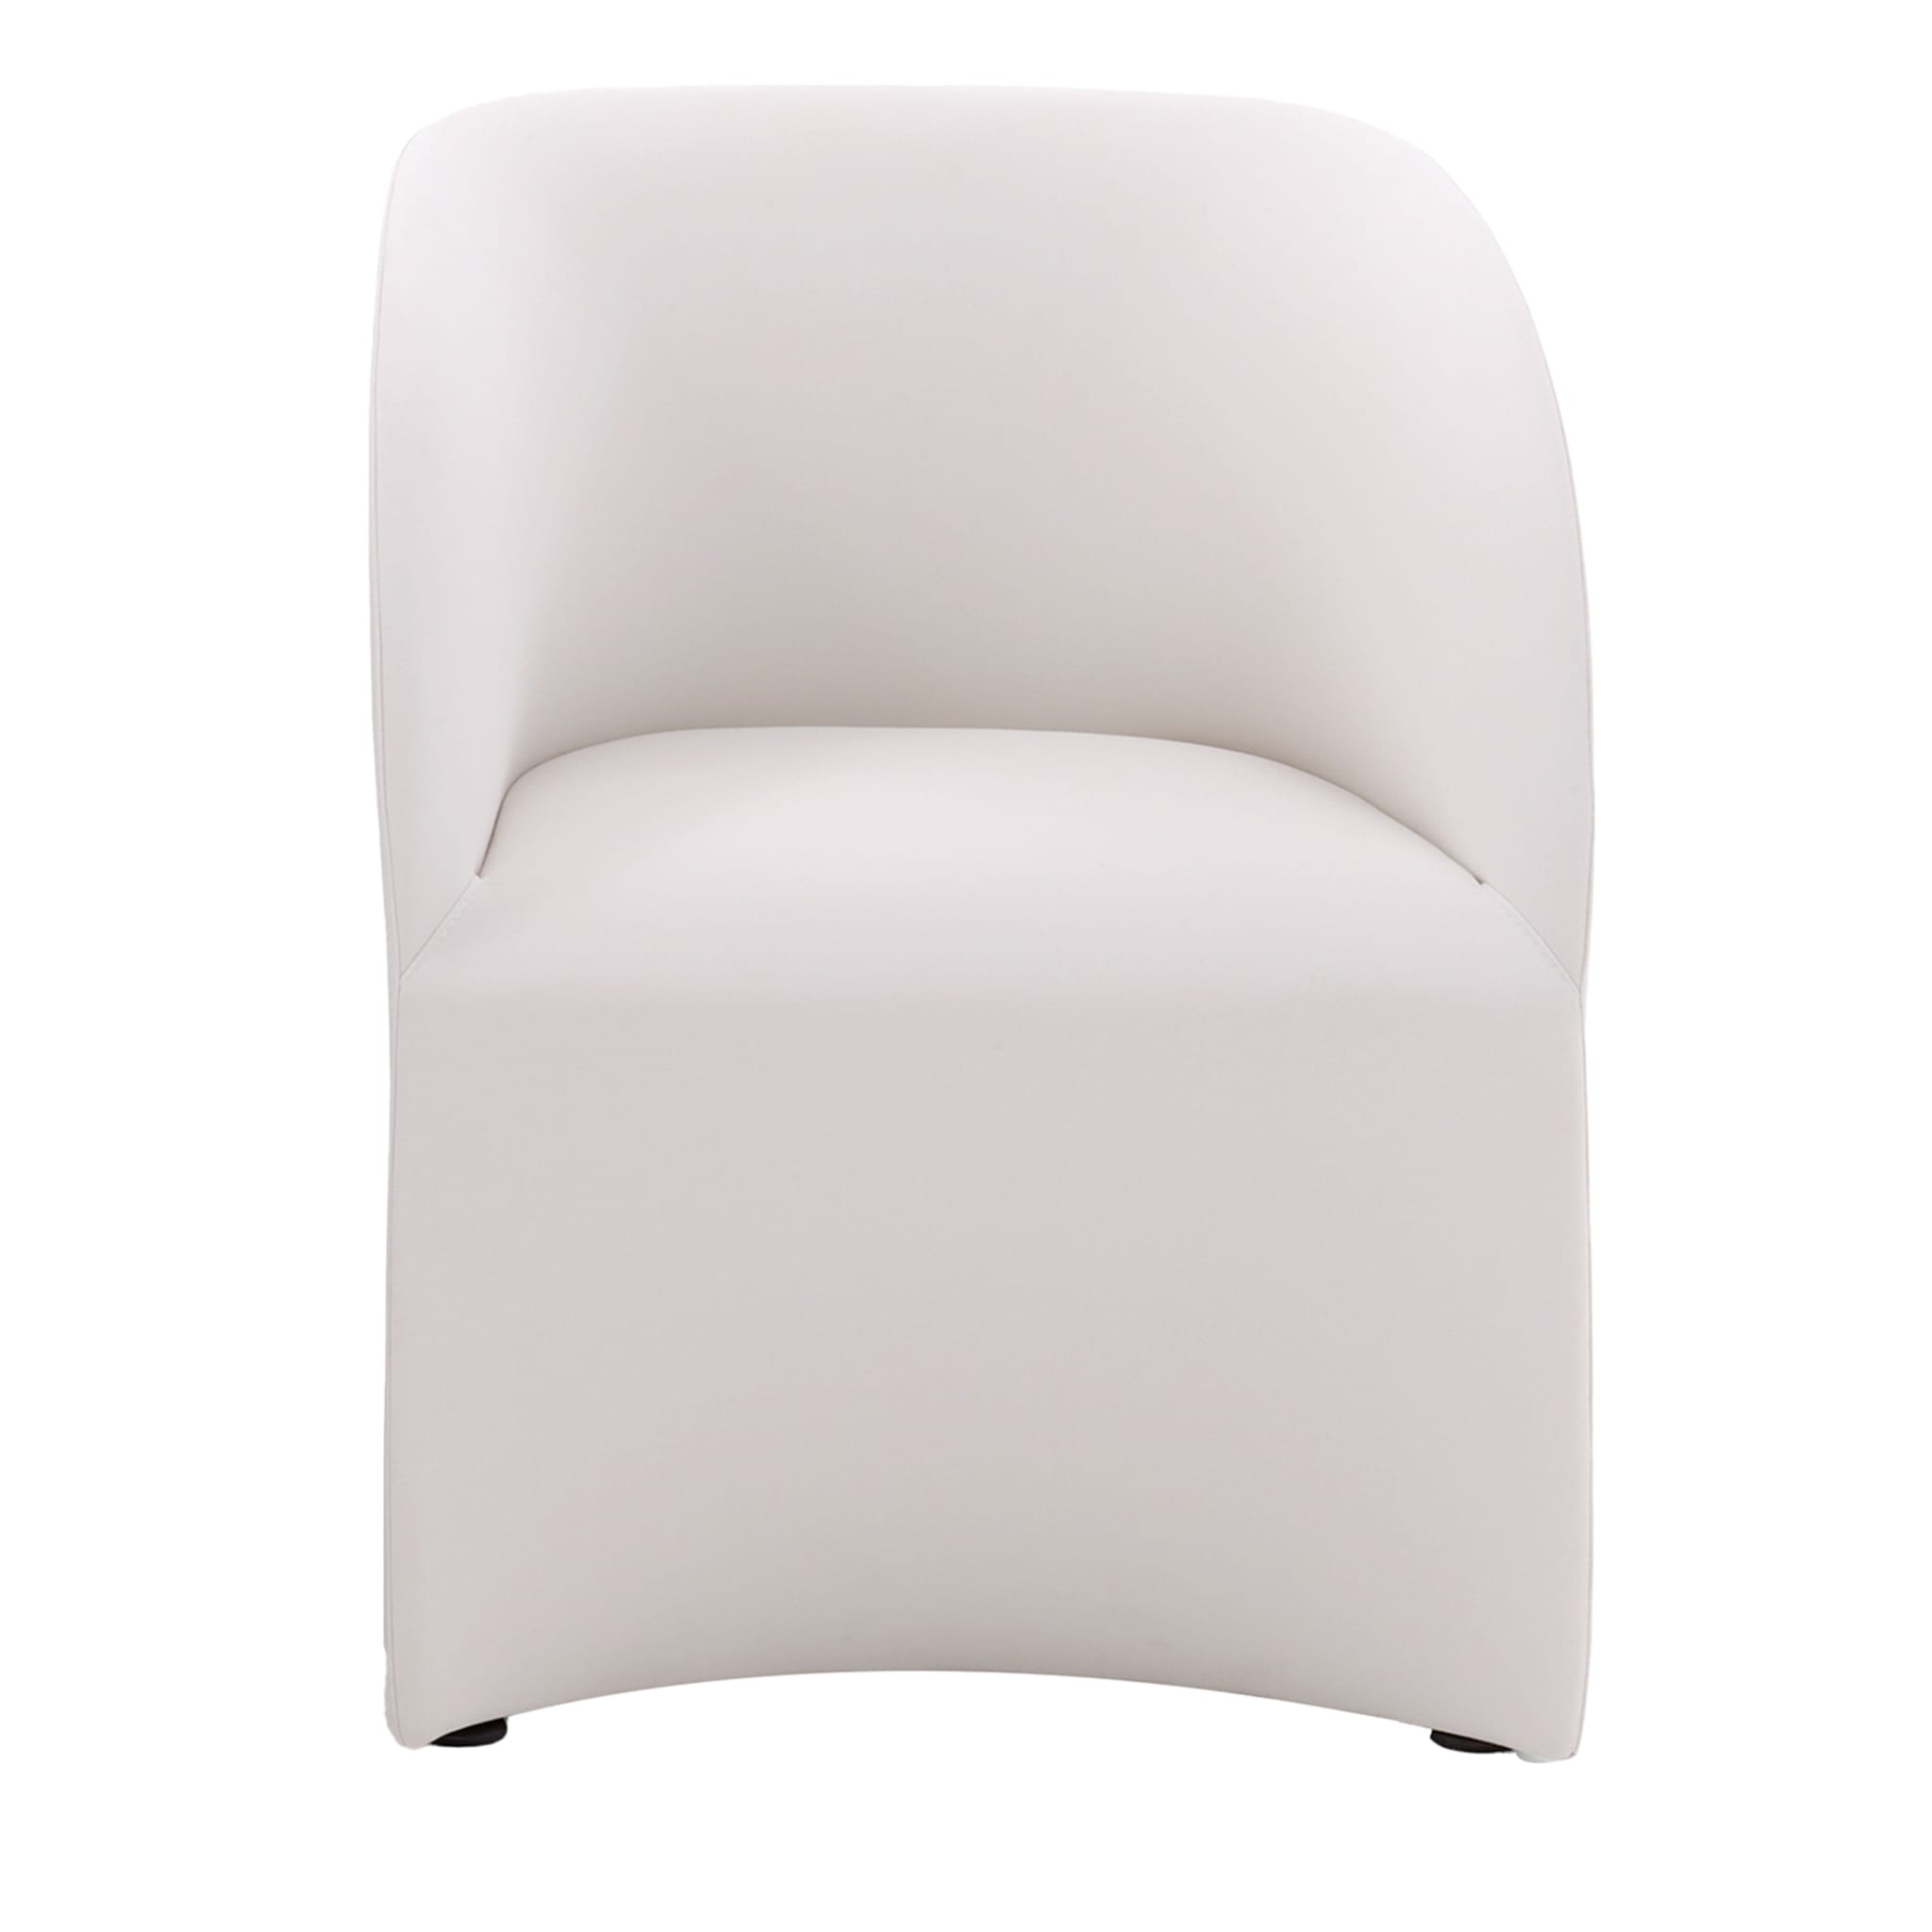 Milly Big White Armchair by Basaglia + Rota Nodari - Main view